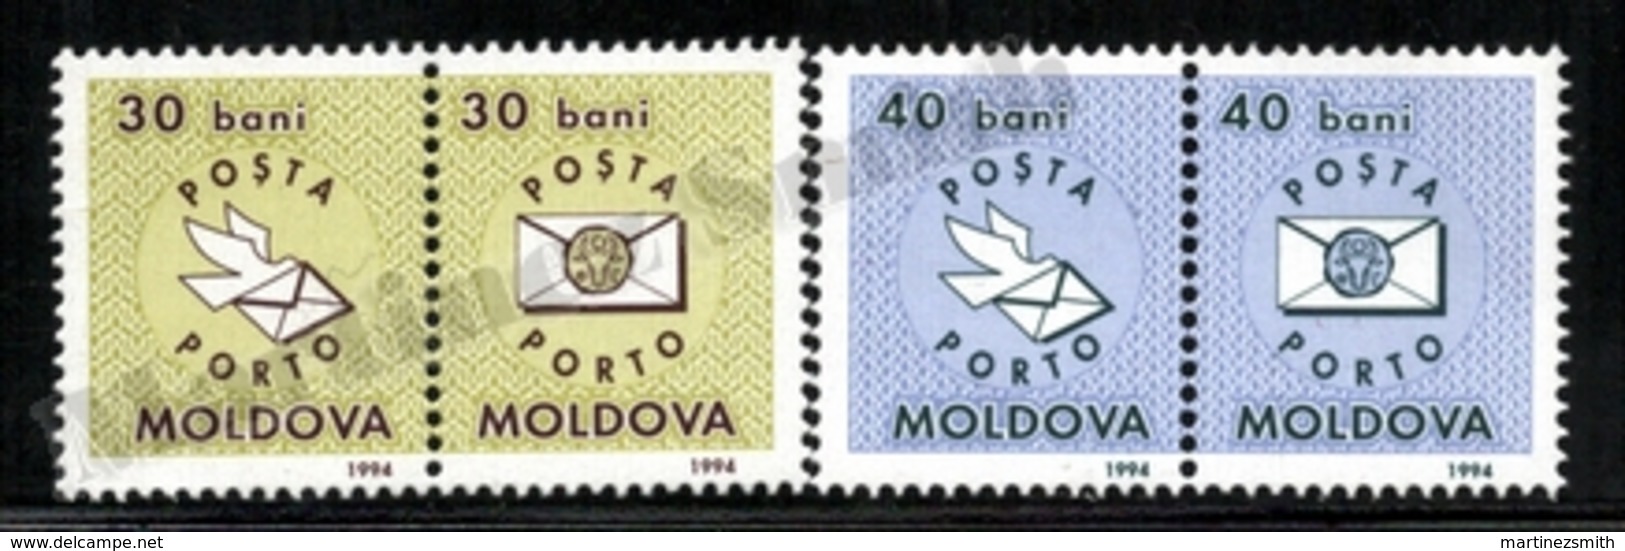 Moldova - Moldavie 1994 Yvert TAX 1-2, Postal Service. Carrier Pigeon & Sealed Letter - MNH - Moldawien (Moldau)